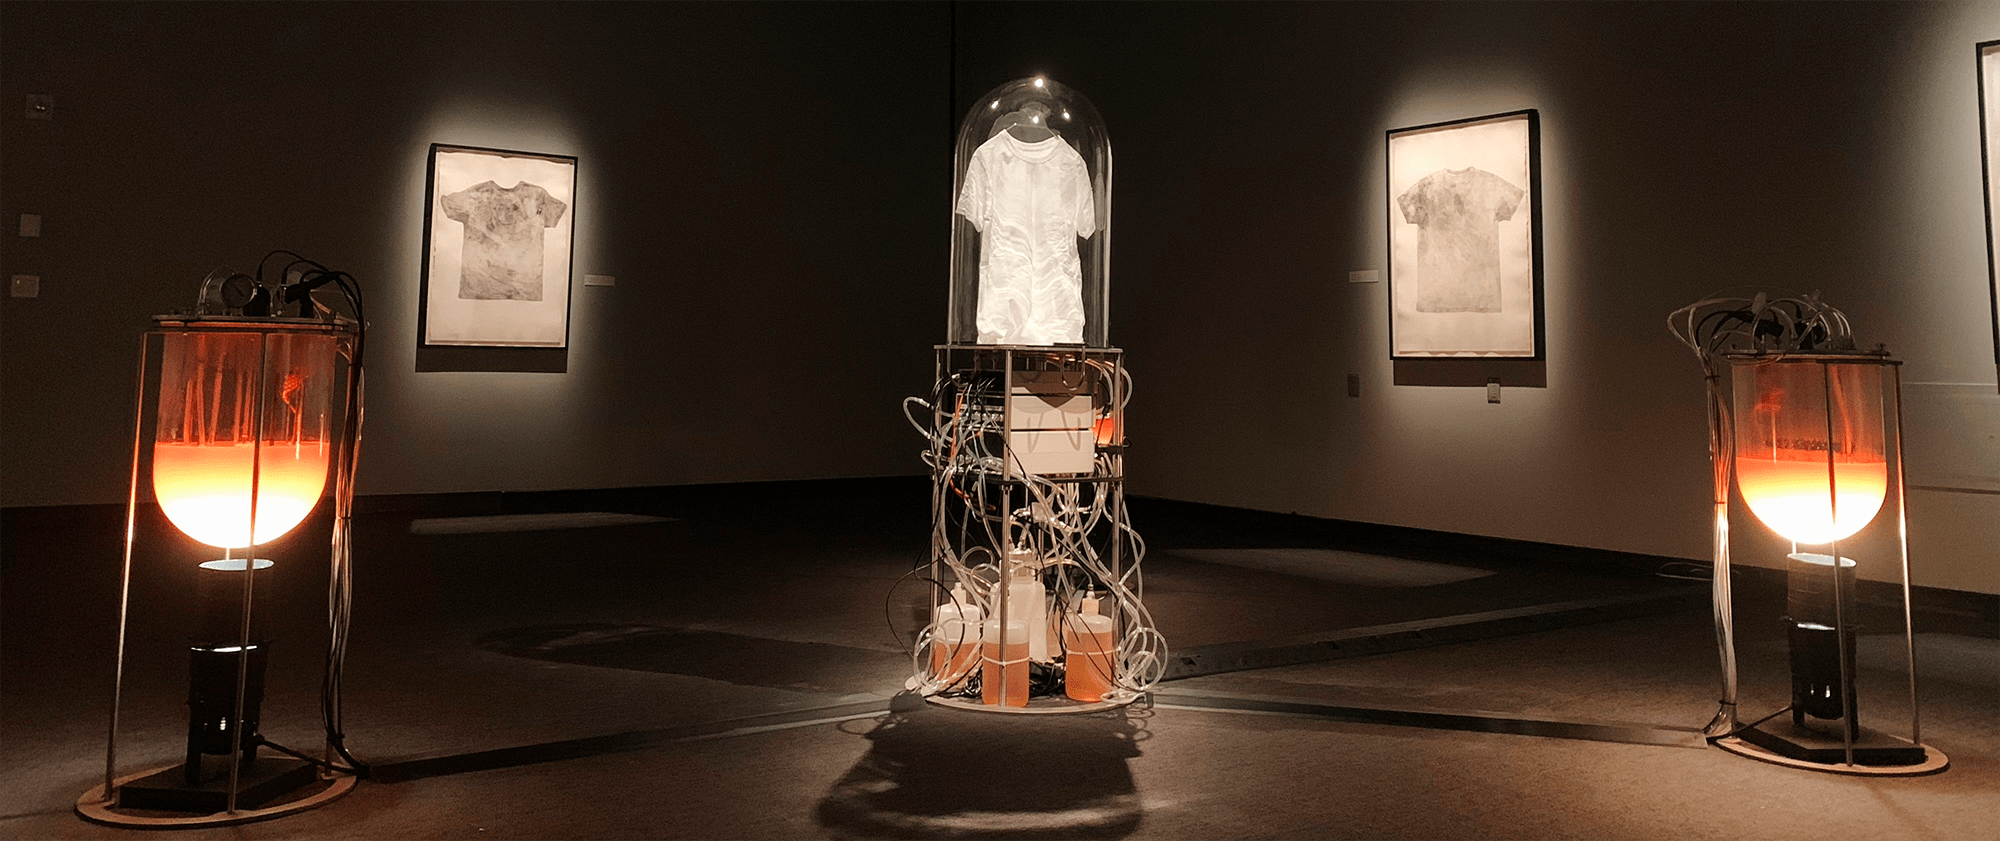 Инсталляция Пола Вануса «Труд»